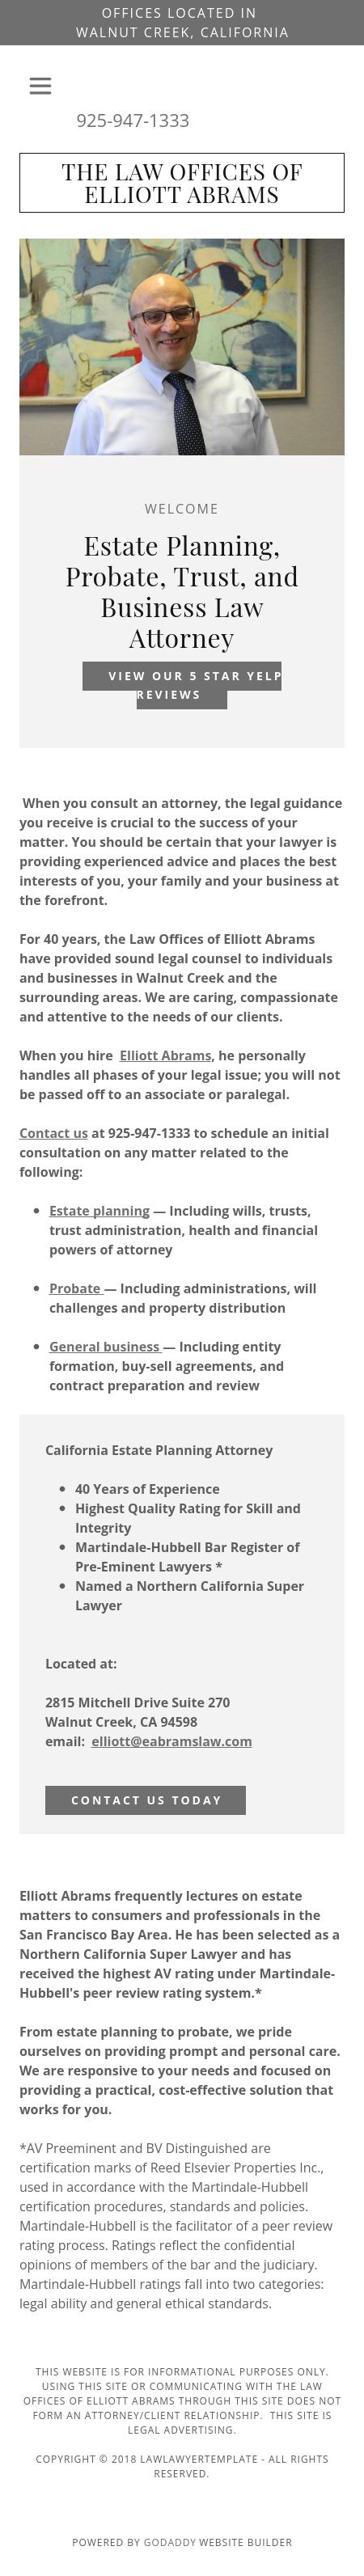 Law Offices of Elliott Abrams - Walnut Creek CA Lawyers